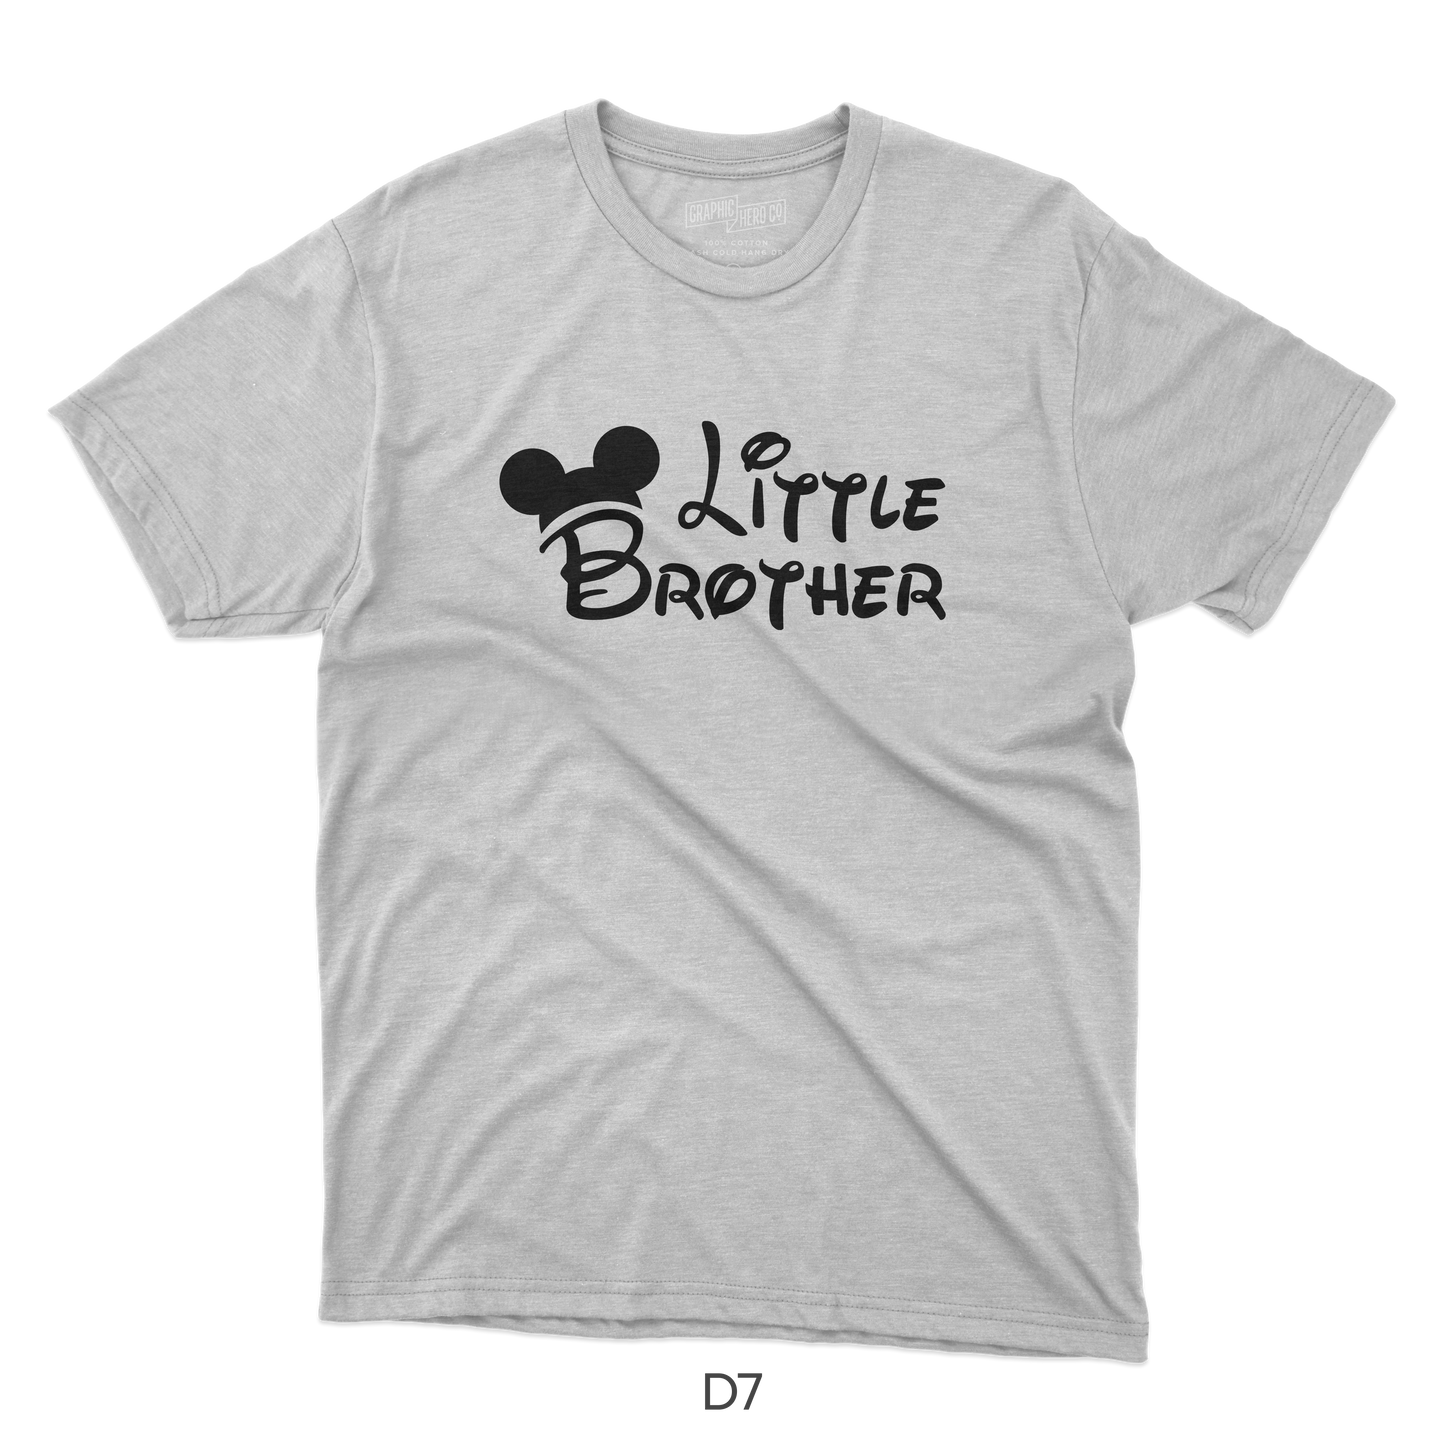 Little Brother Disney Design (D7)